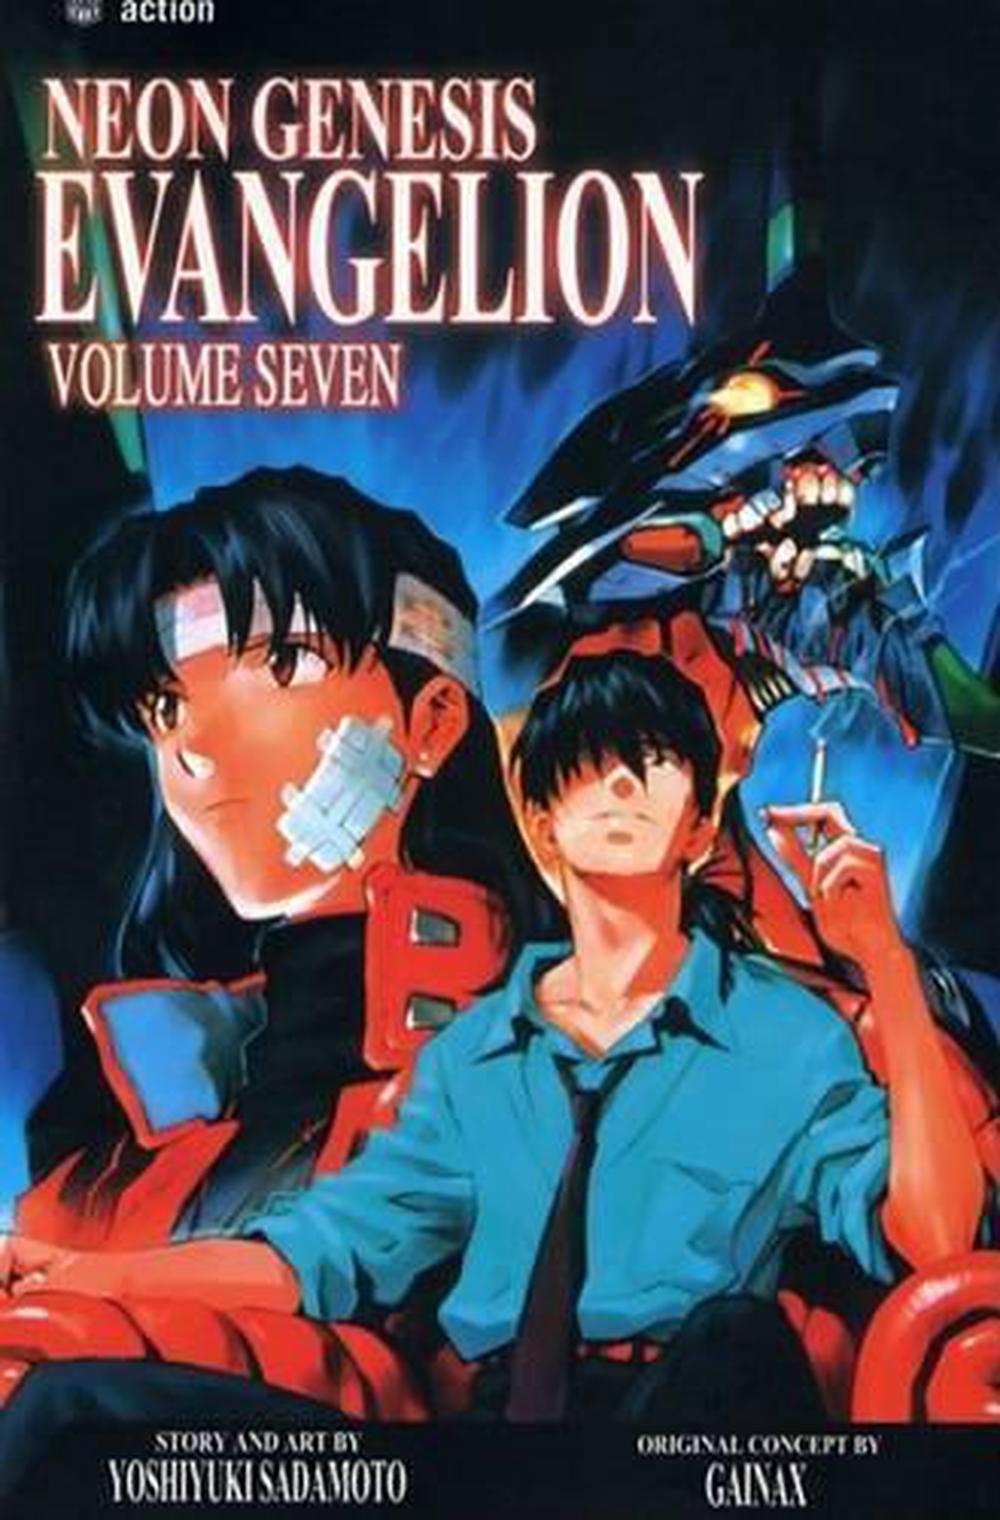 Neon Genesis Evangelion Volume 7 By Yoshiyuki Sadamoto English 